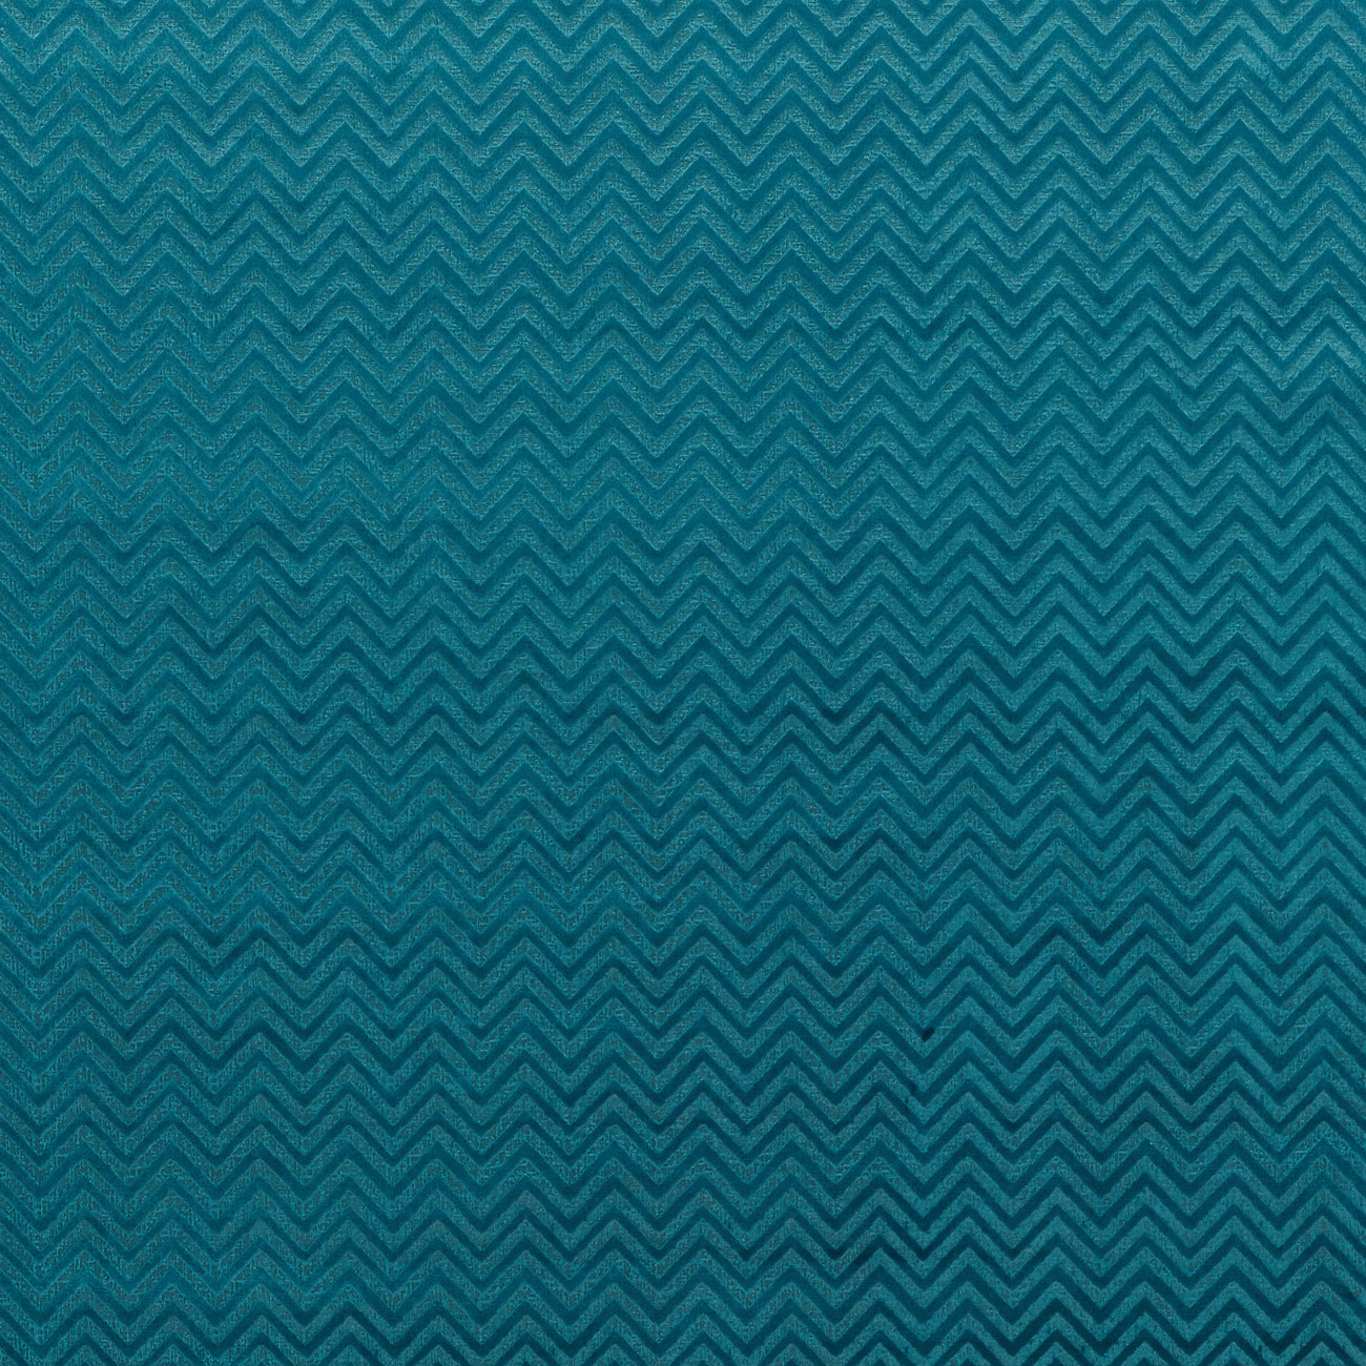 Nexus Peacock Fabric by STG